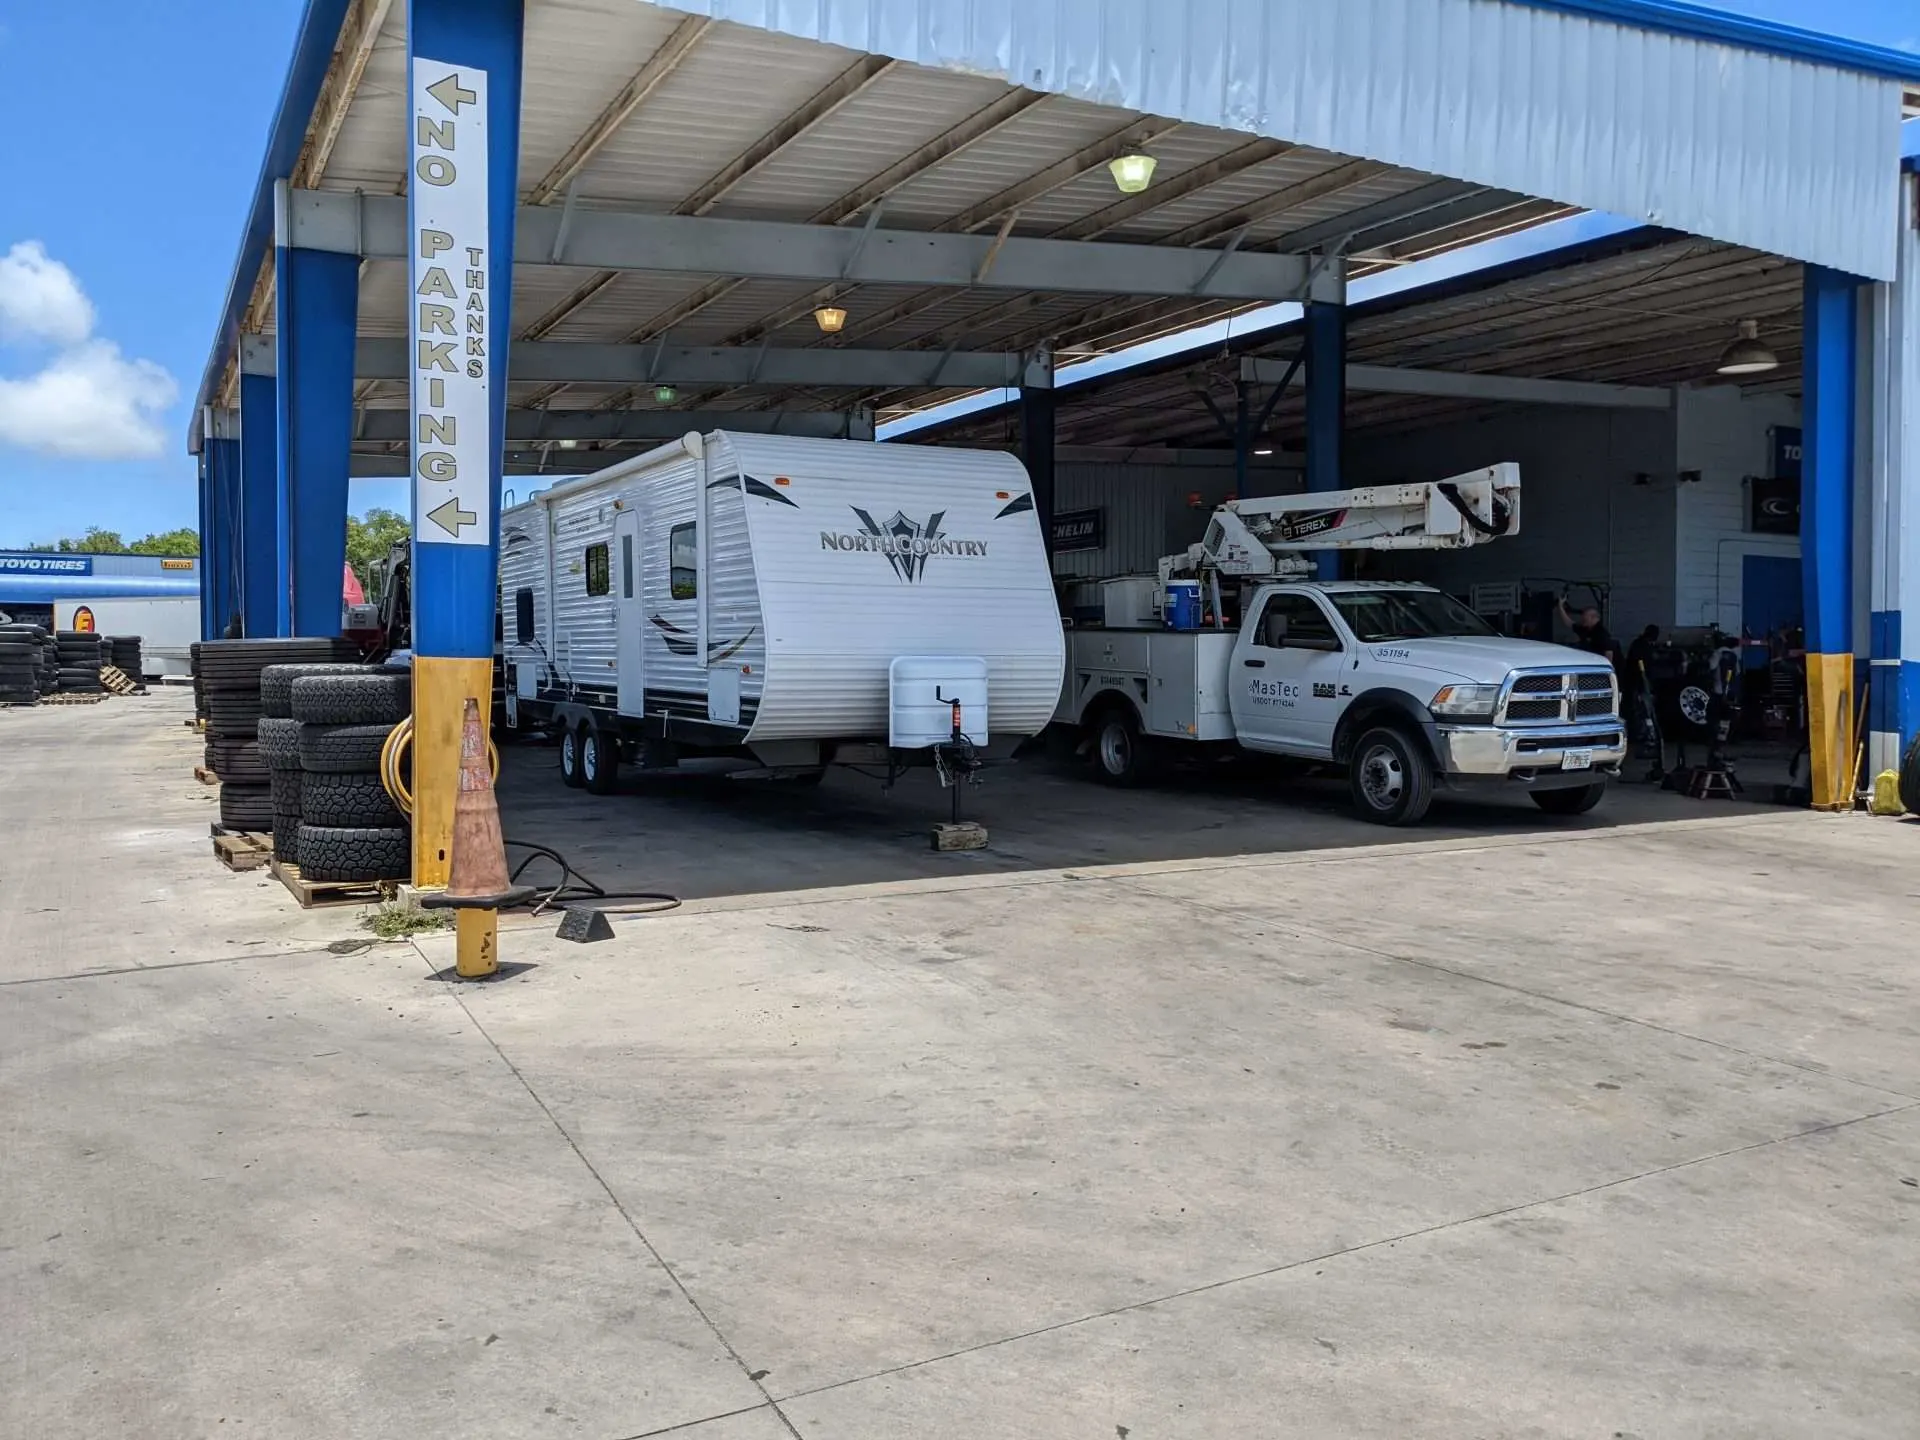 Travel trailer at RV repair shop